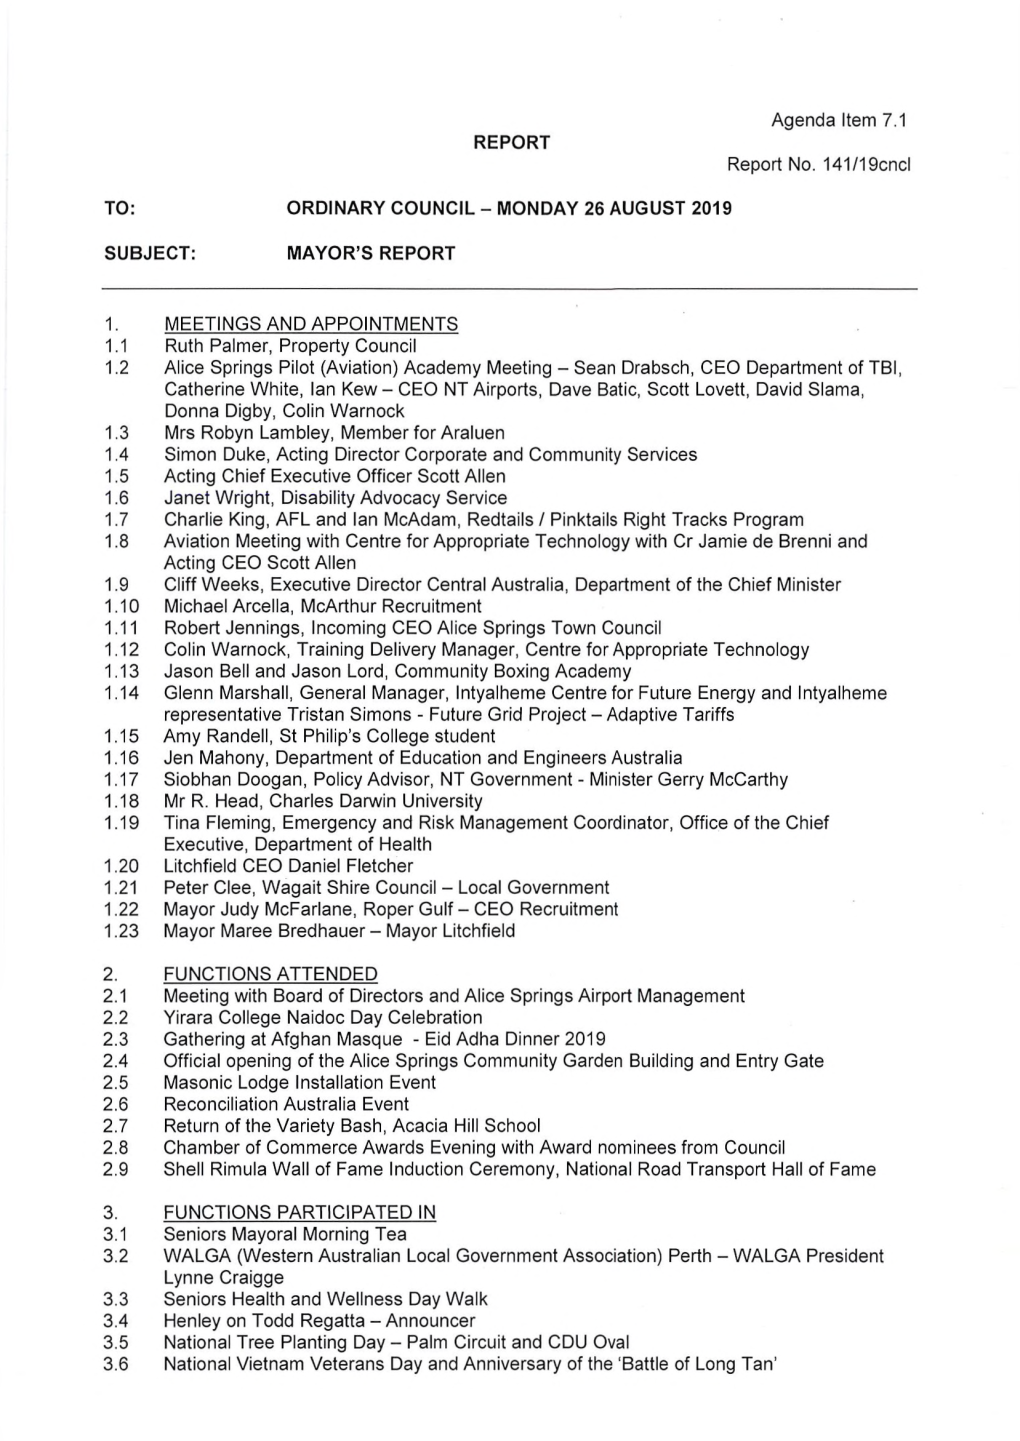 Agenda Item 7.1 Report No. 141/19Cncl 1. MEETINGS